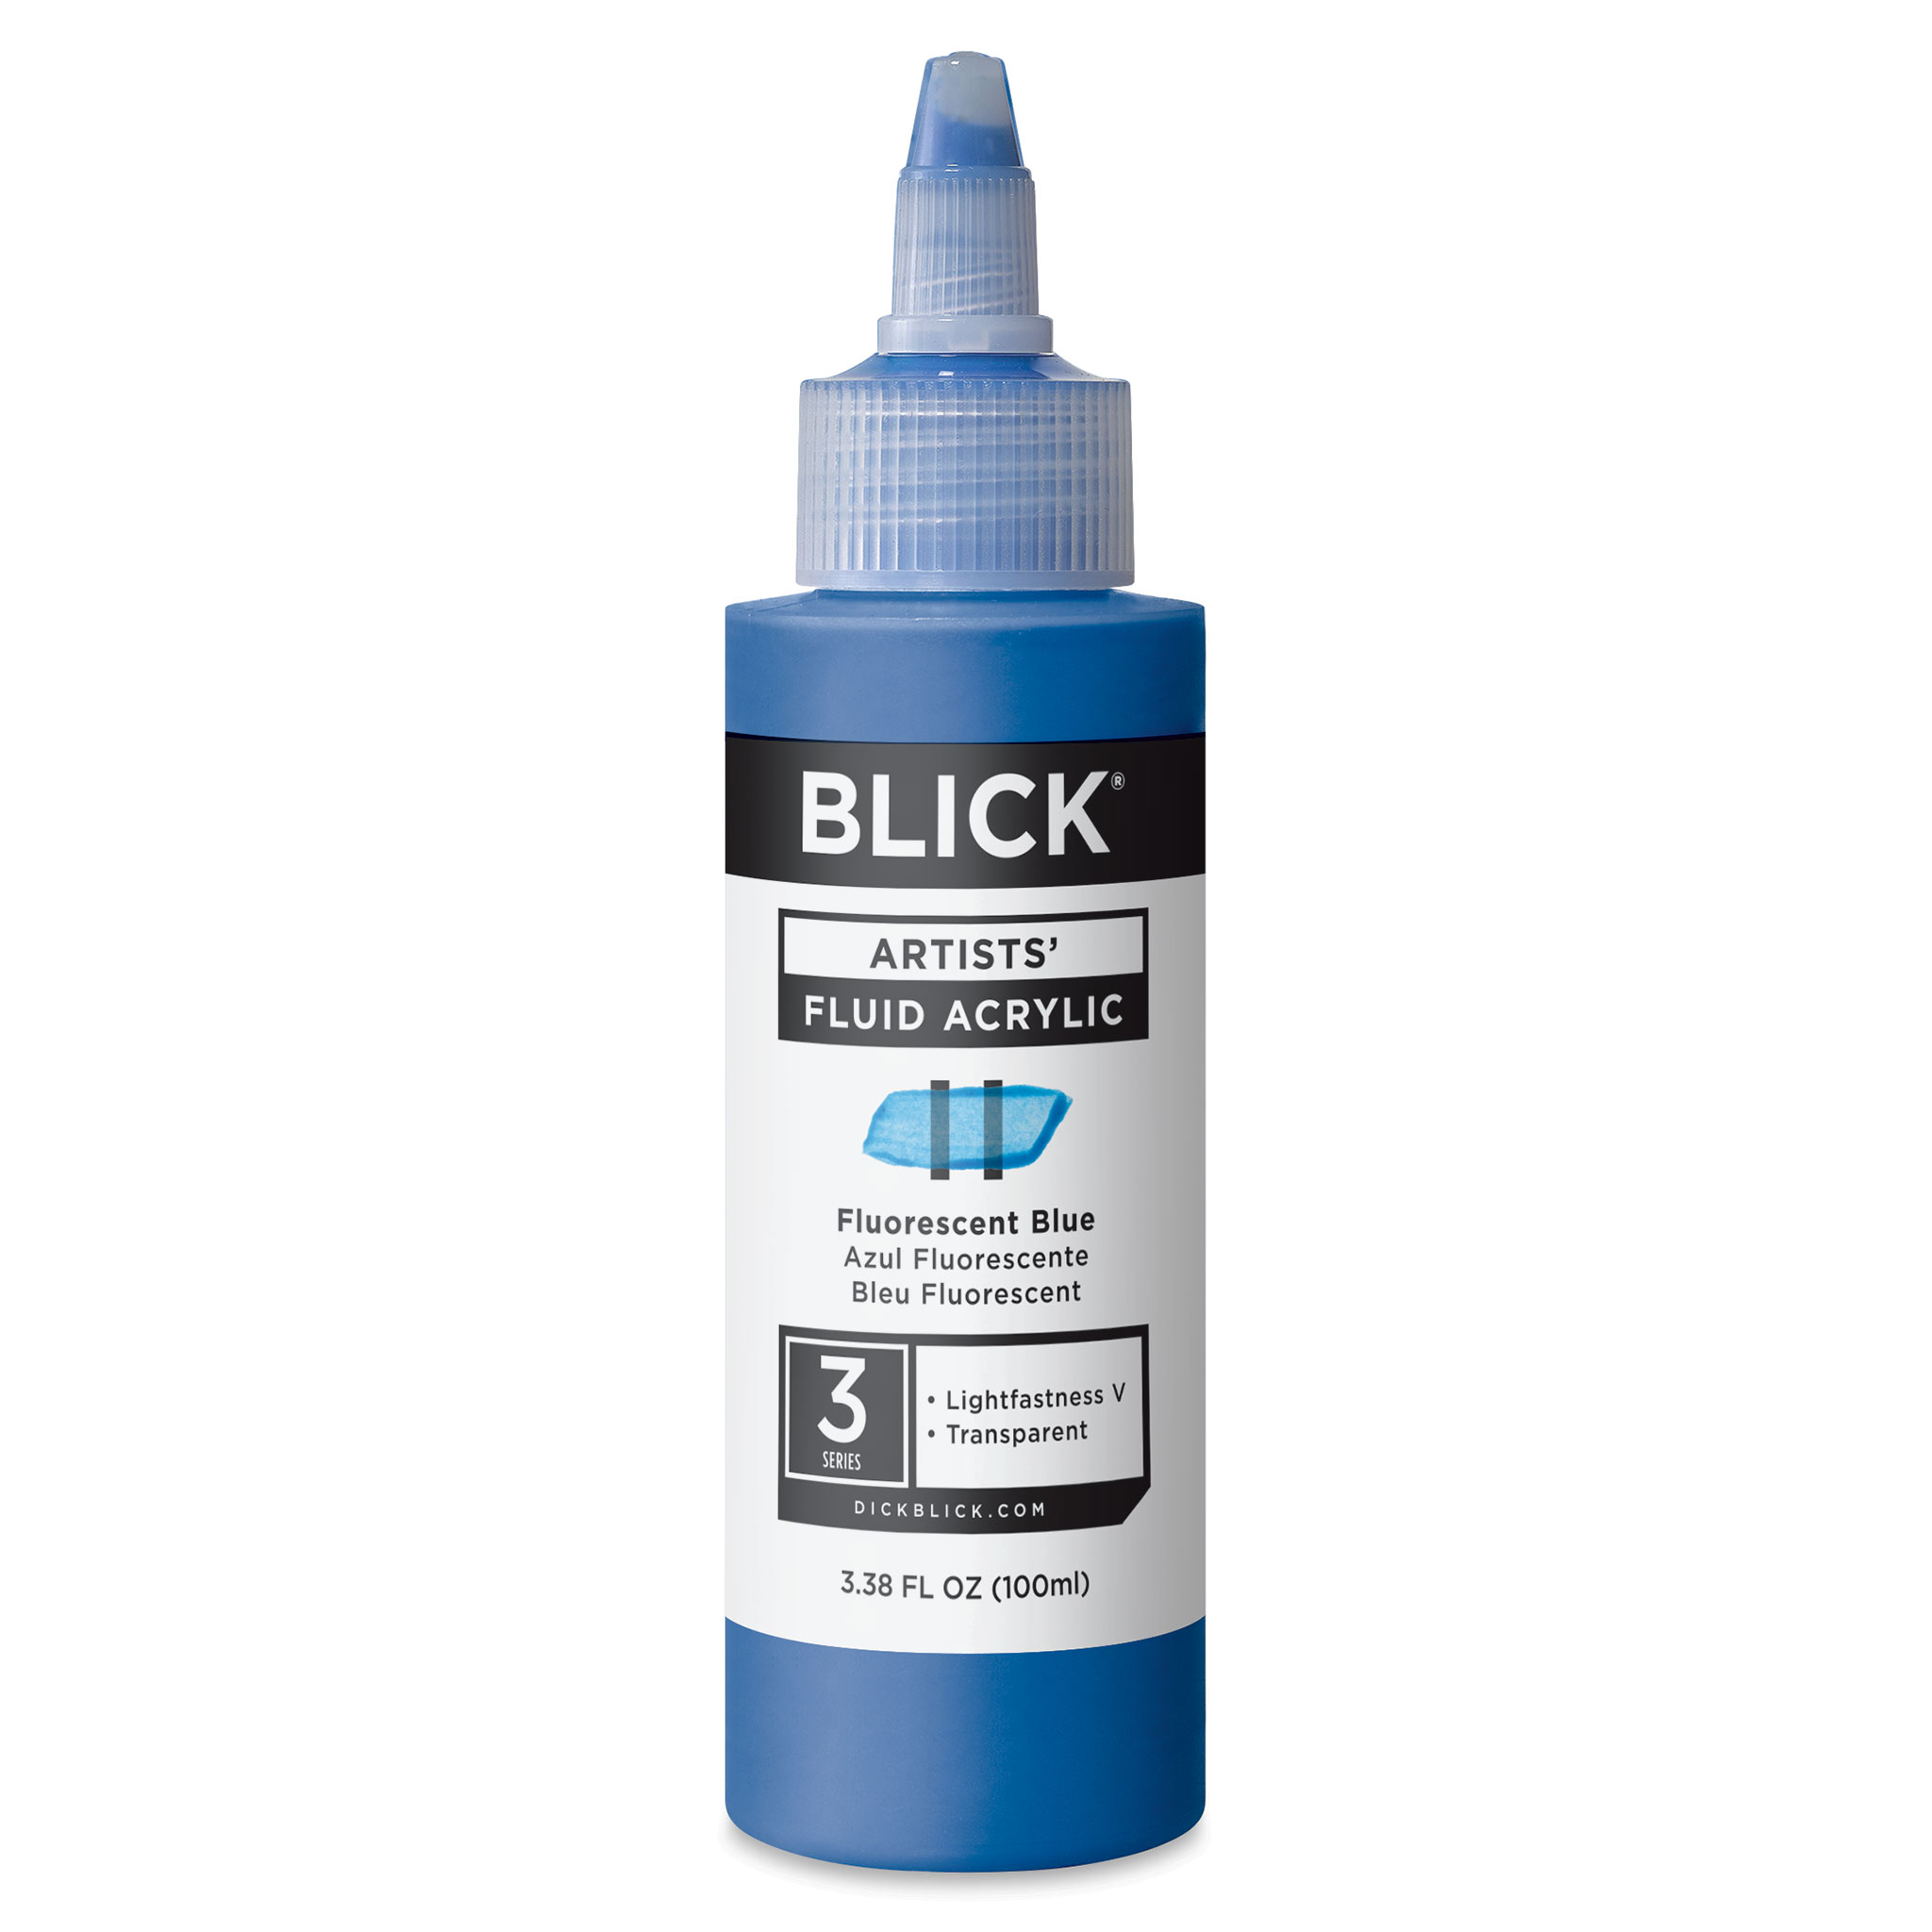 Blick Artists' Fluid Acrylic - Fluorescent Blue, 200 ml